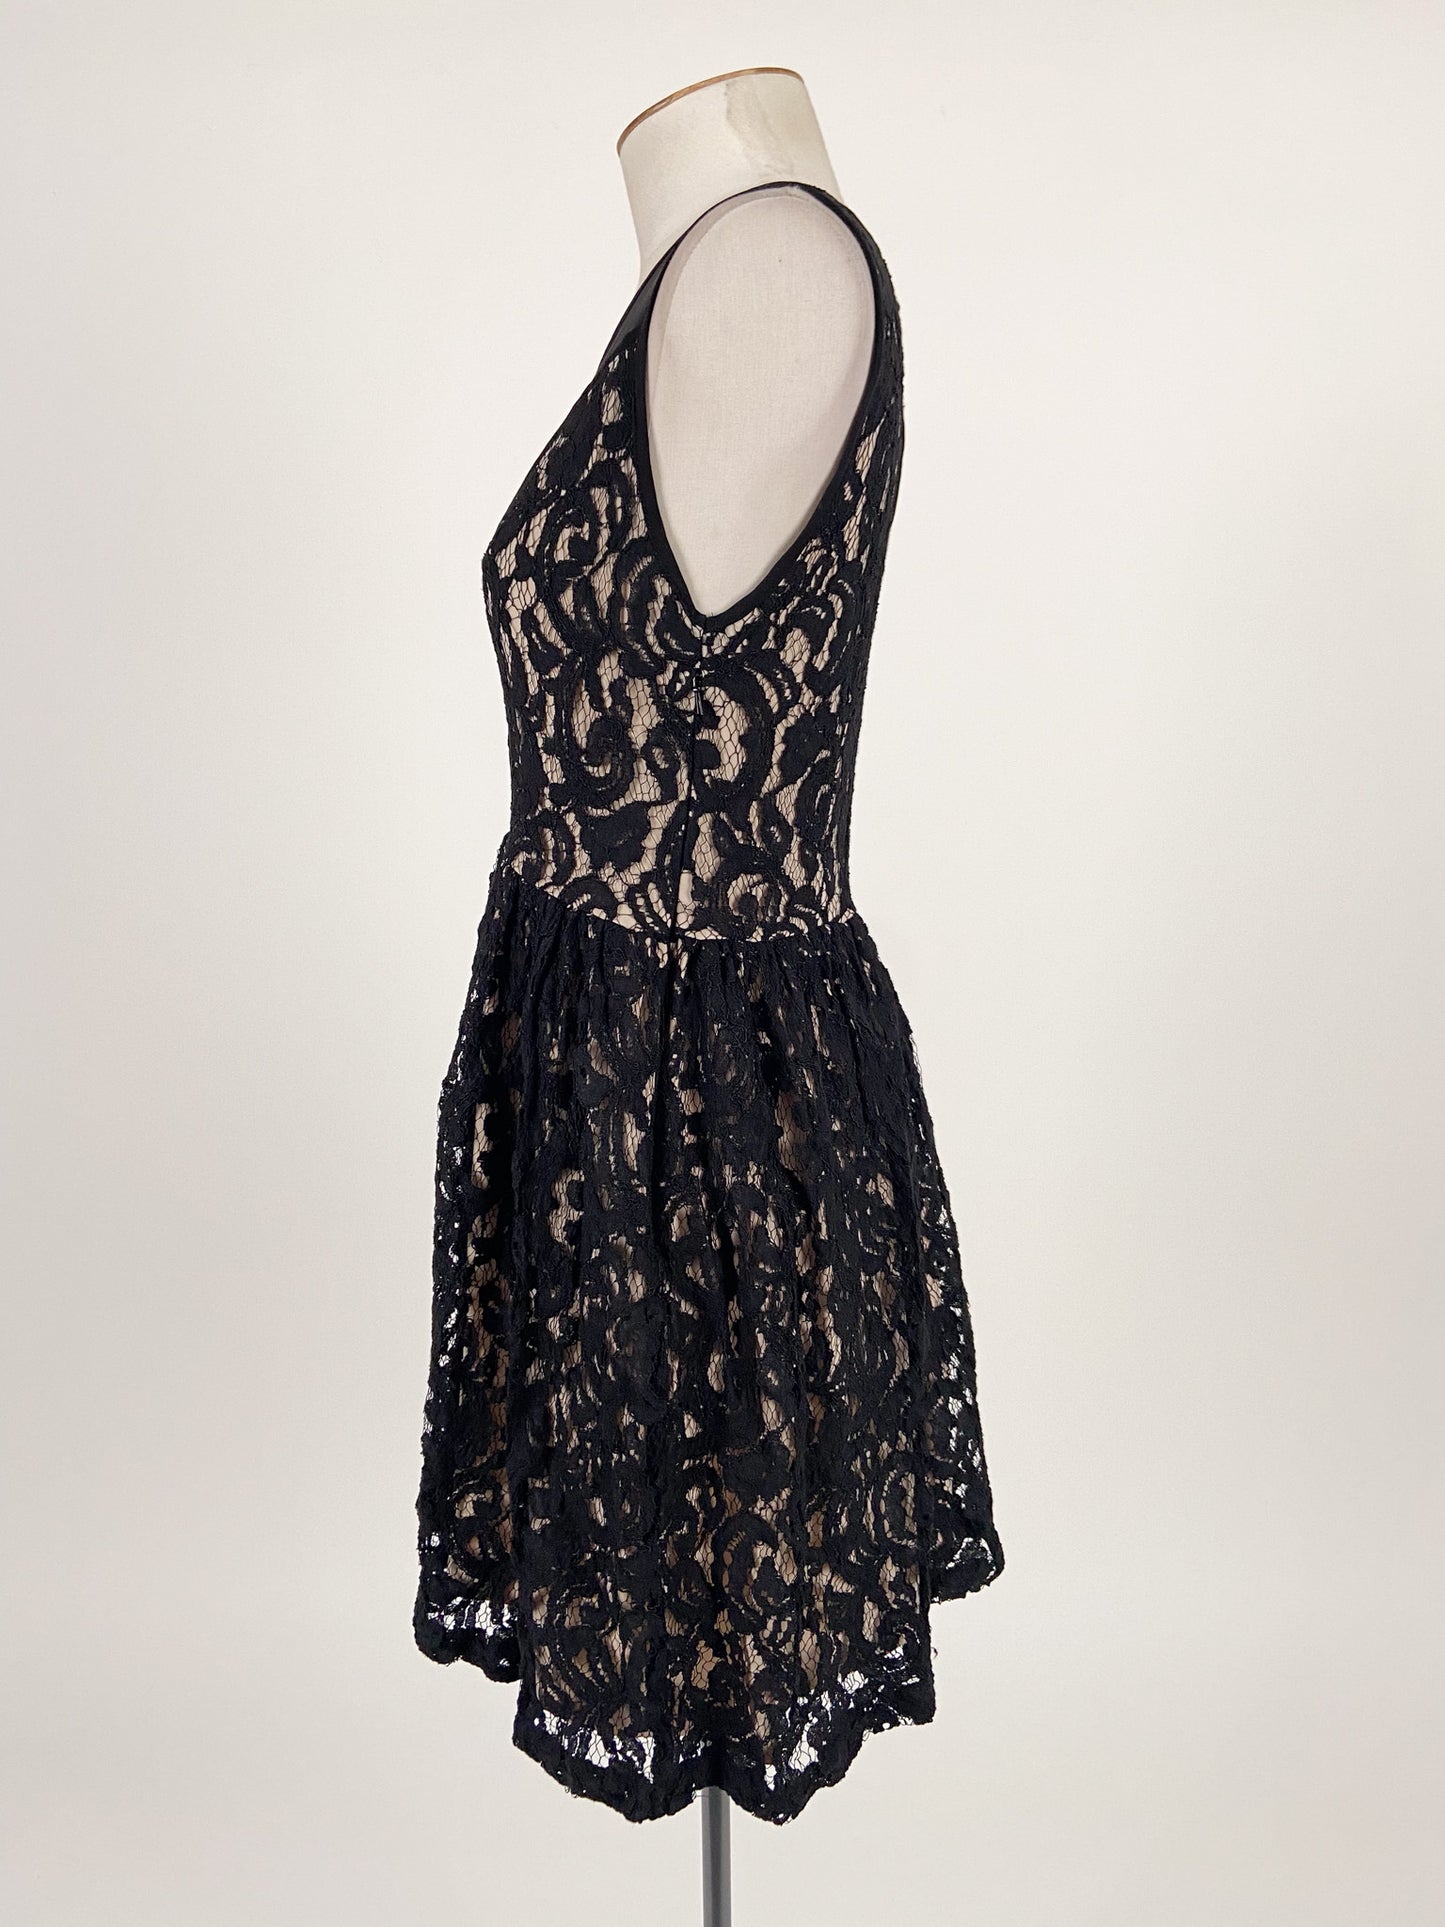 Moochi | Black Formal Dress | Size 6